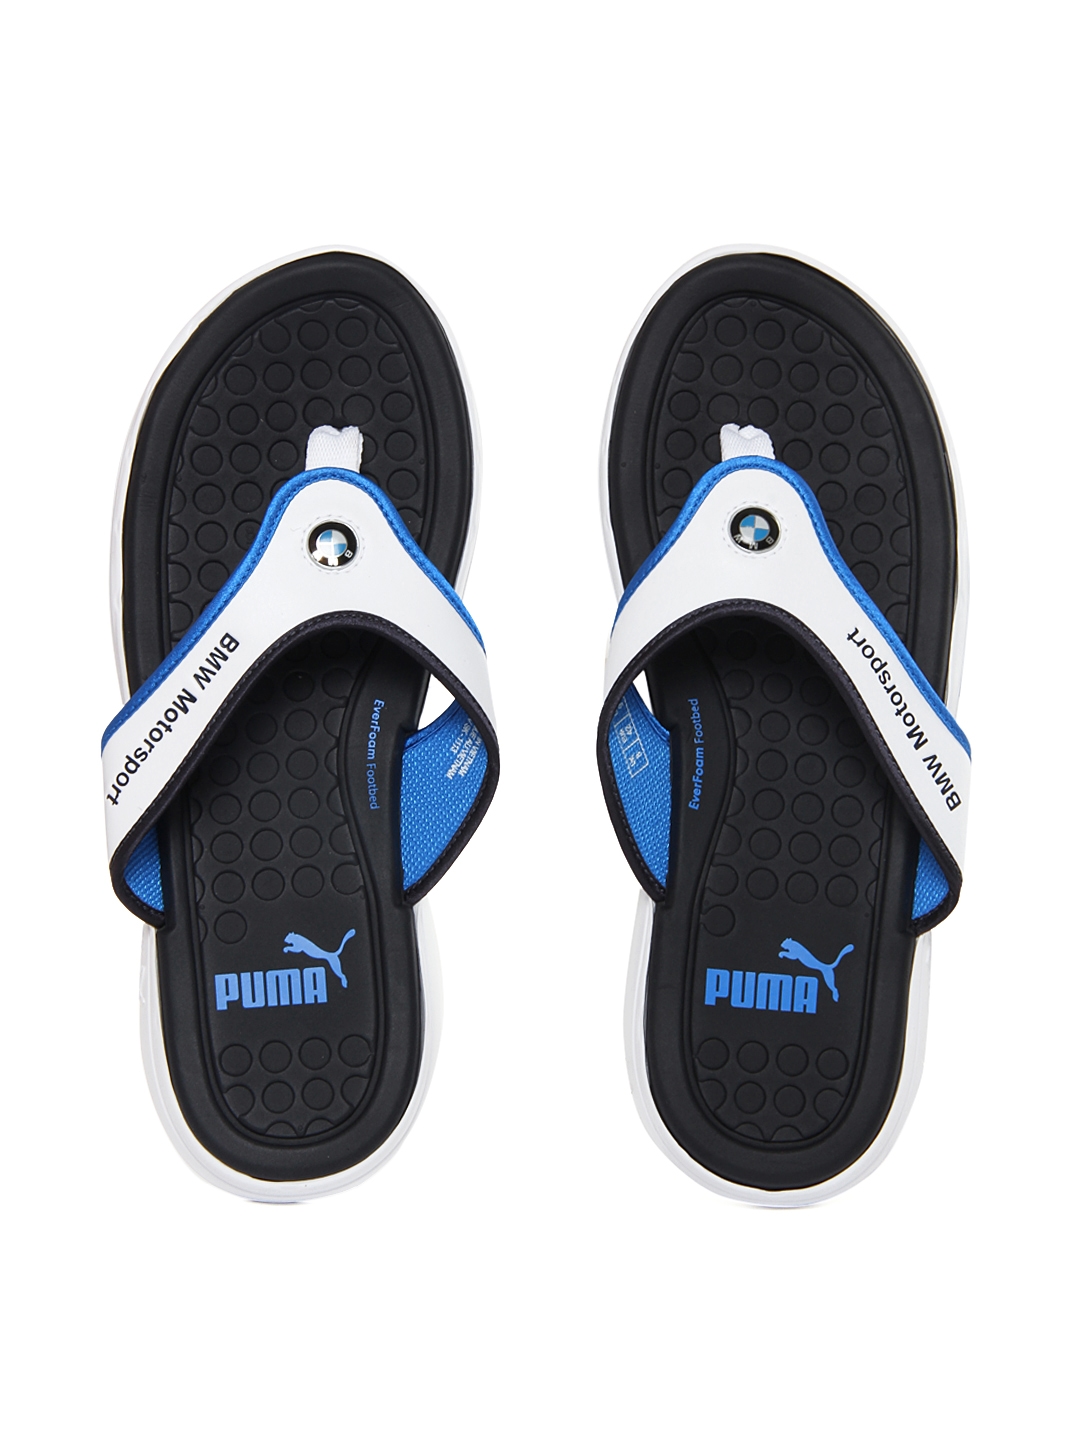 puma bmw slippers